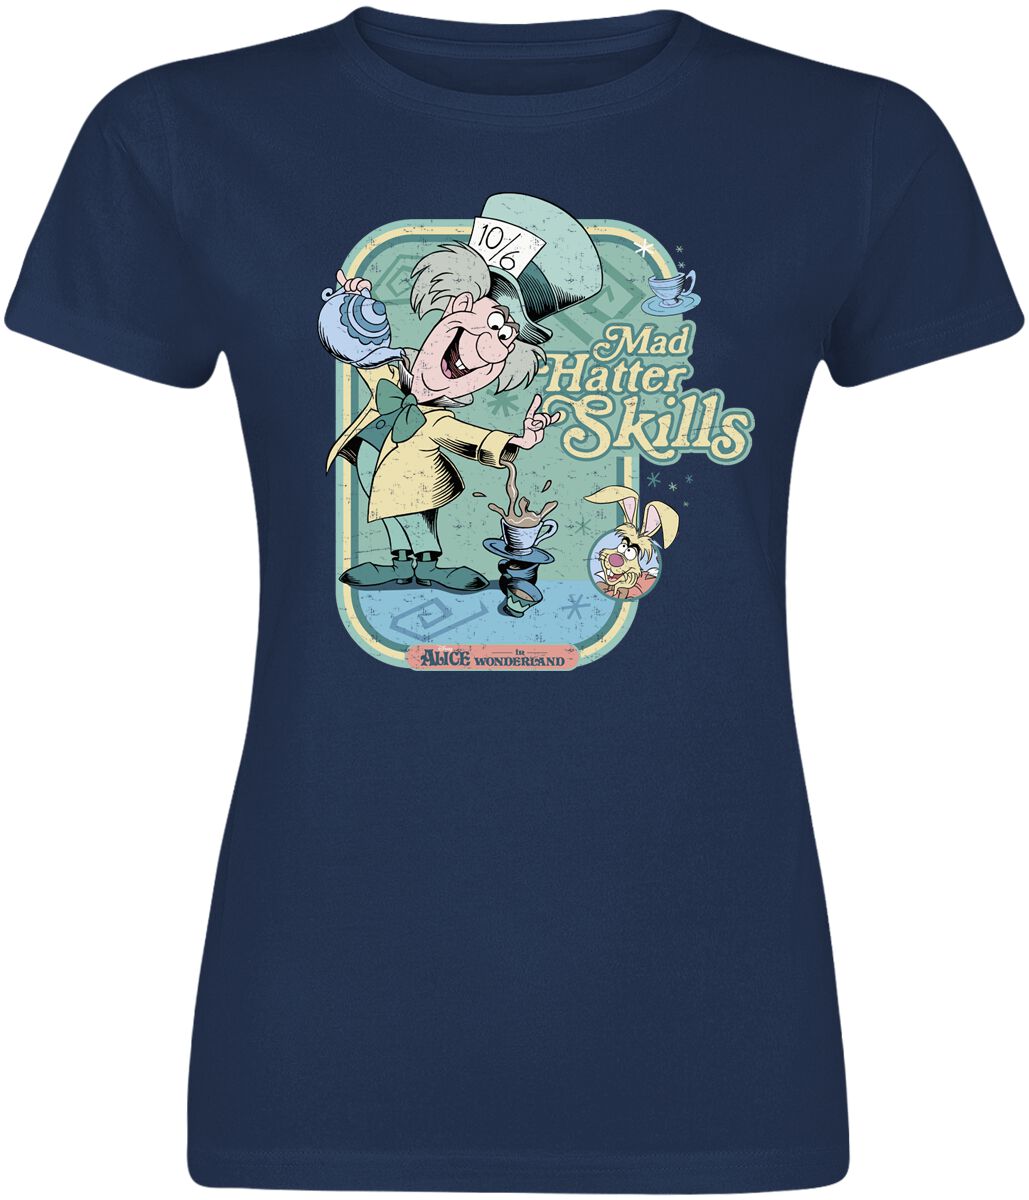 Alice im Wunderland Mad hatter Skills T-Shirt navy in XL